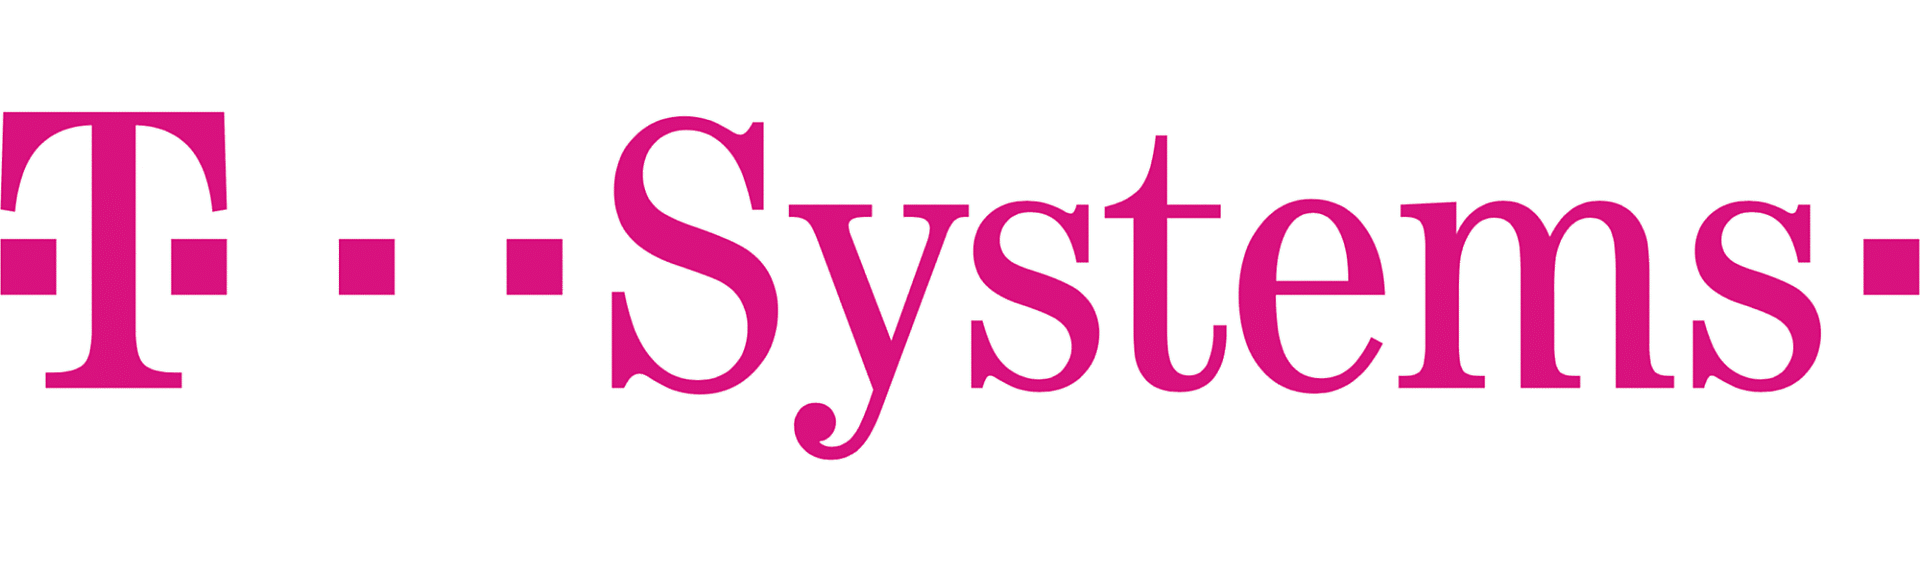 T systems logo 2684 74fa838acb